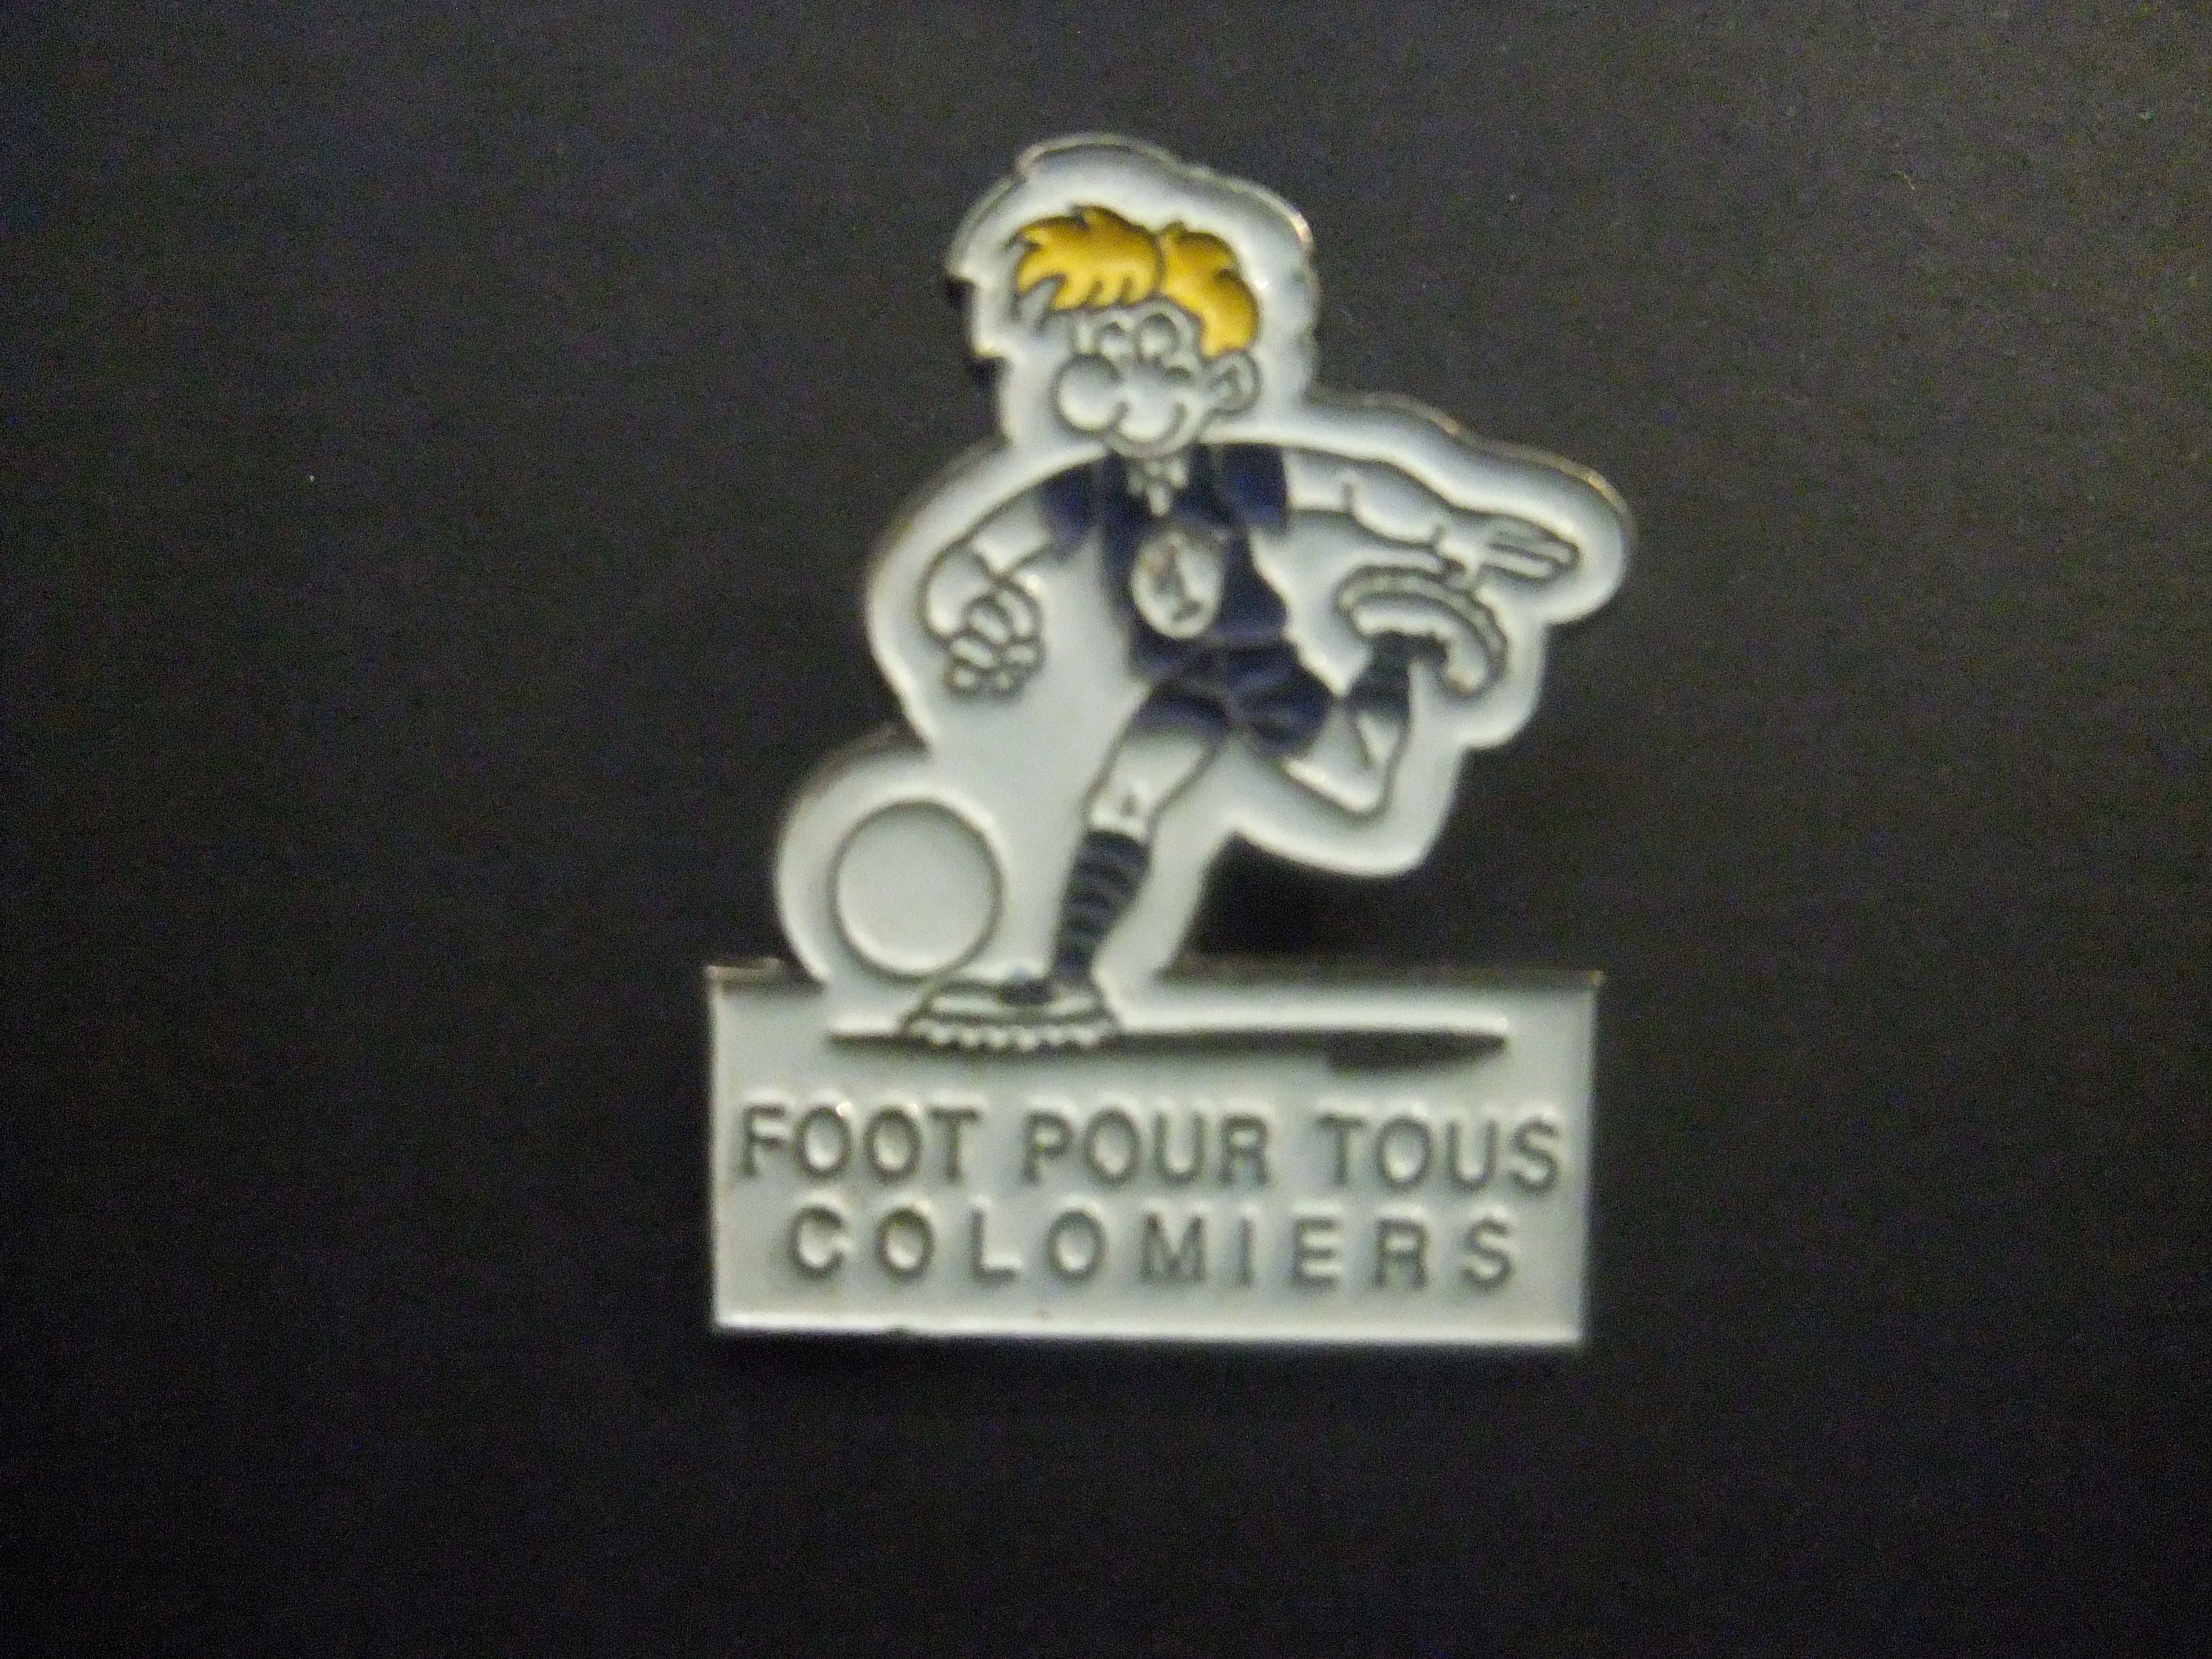 Club de foot Colomiers Franse voetbalclub